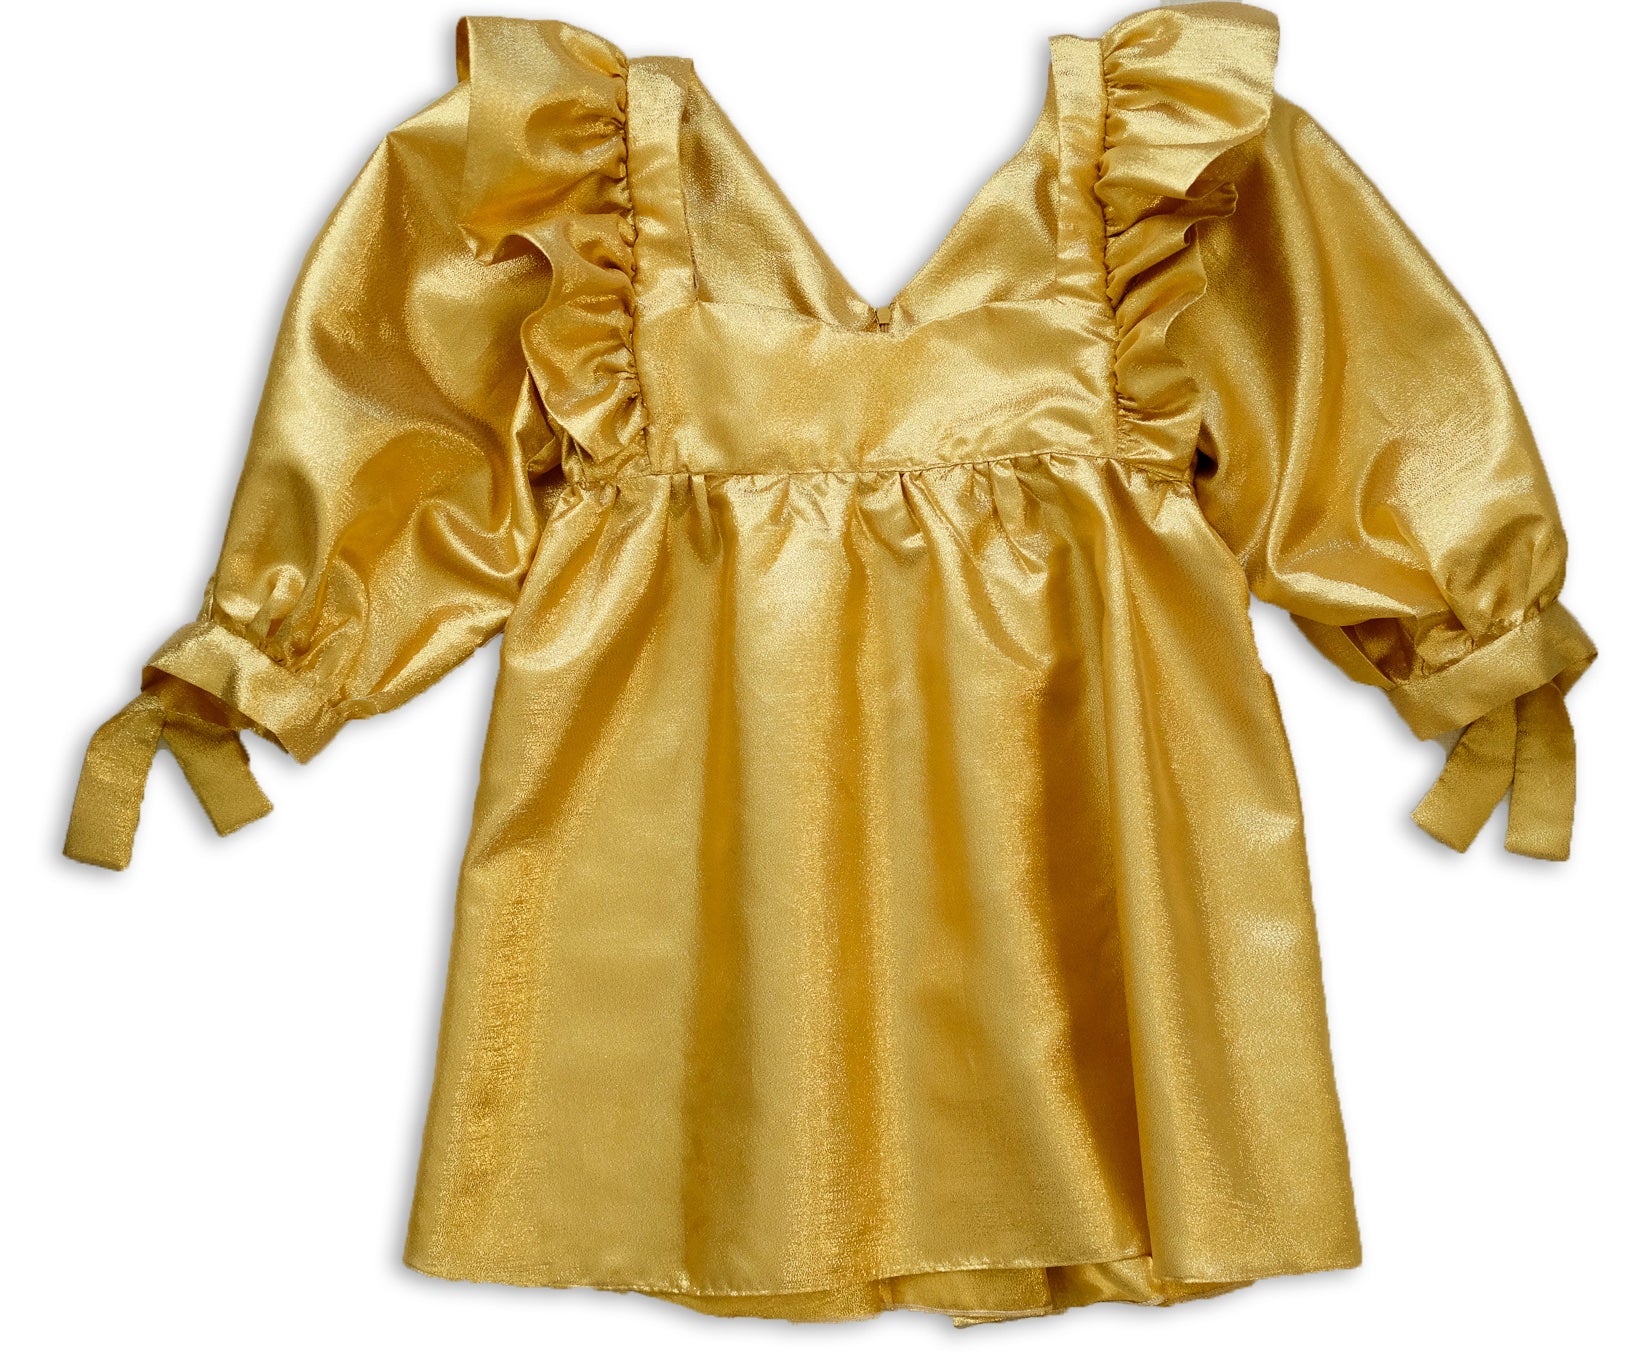 atomo dress in azteca gold